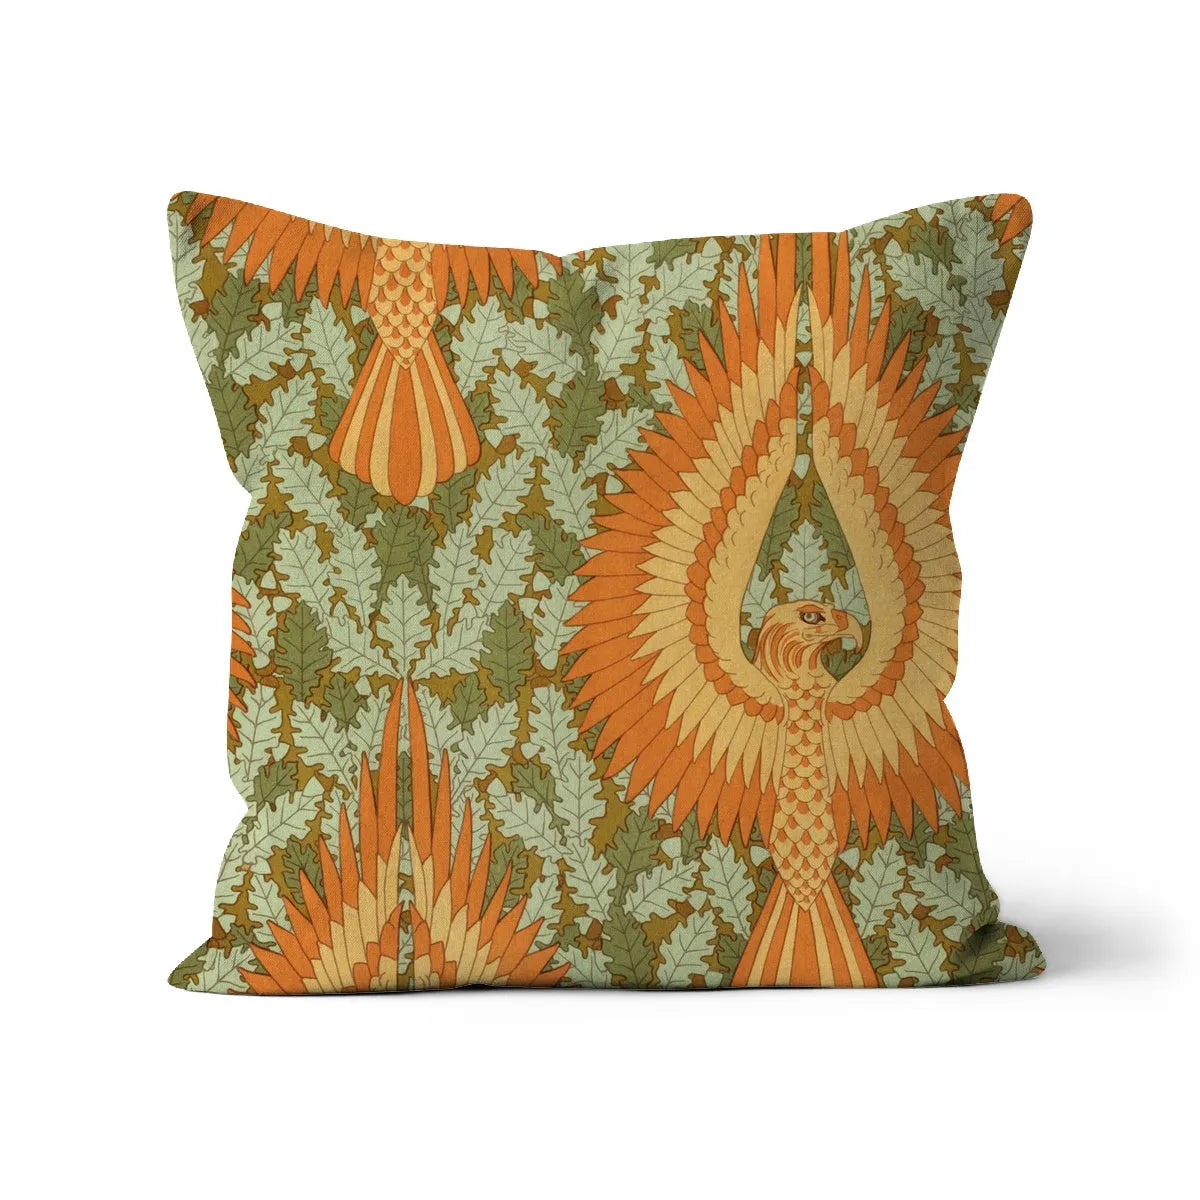 Aigles et chêne - Maurice Pillard Verneuil Cushion - Decorative Throw Pillow